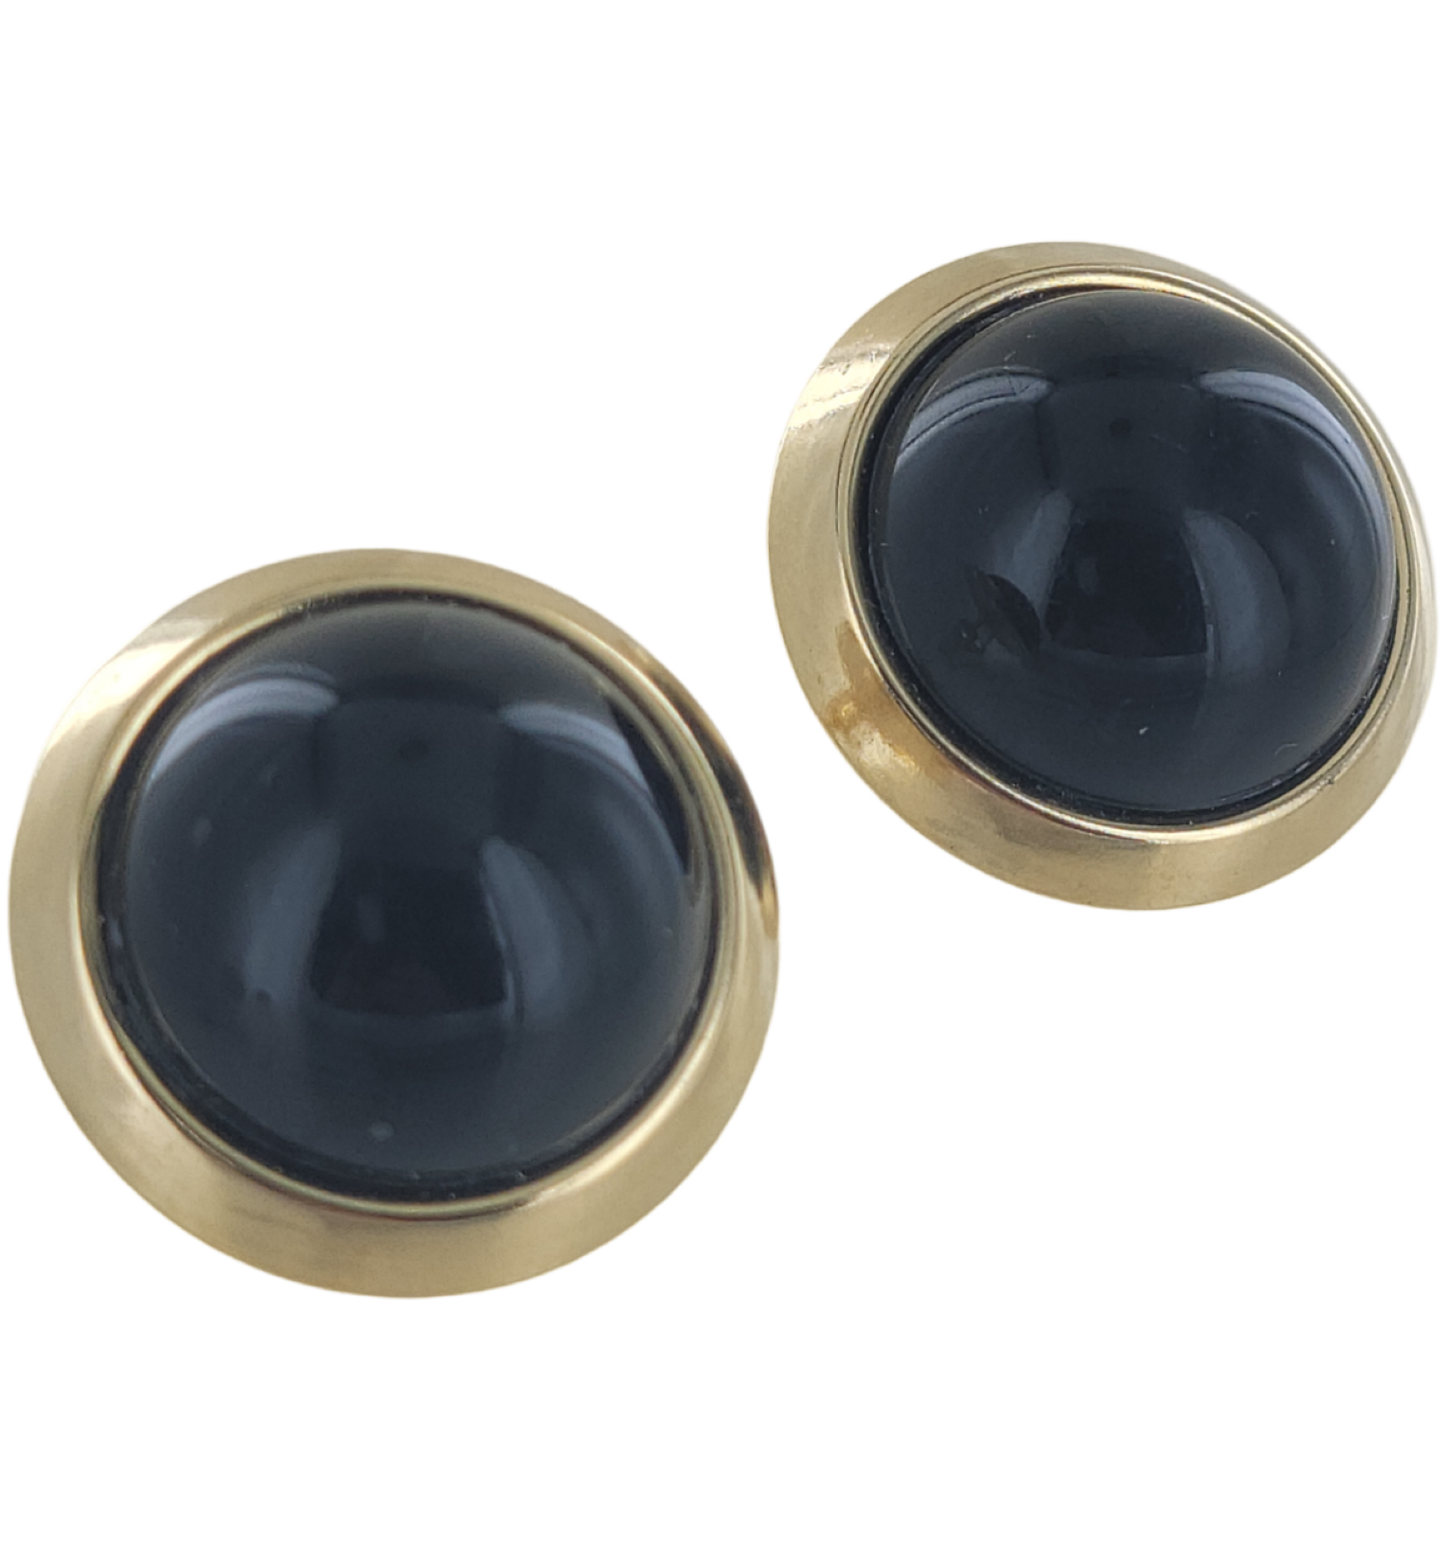 Napier - Black Gold Tone Large Button Clip On Earrings